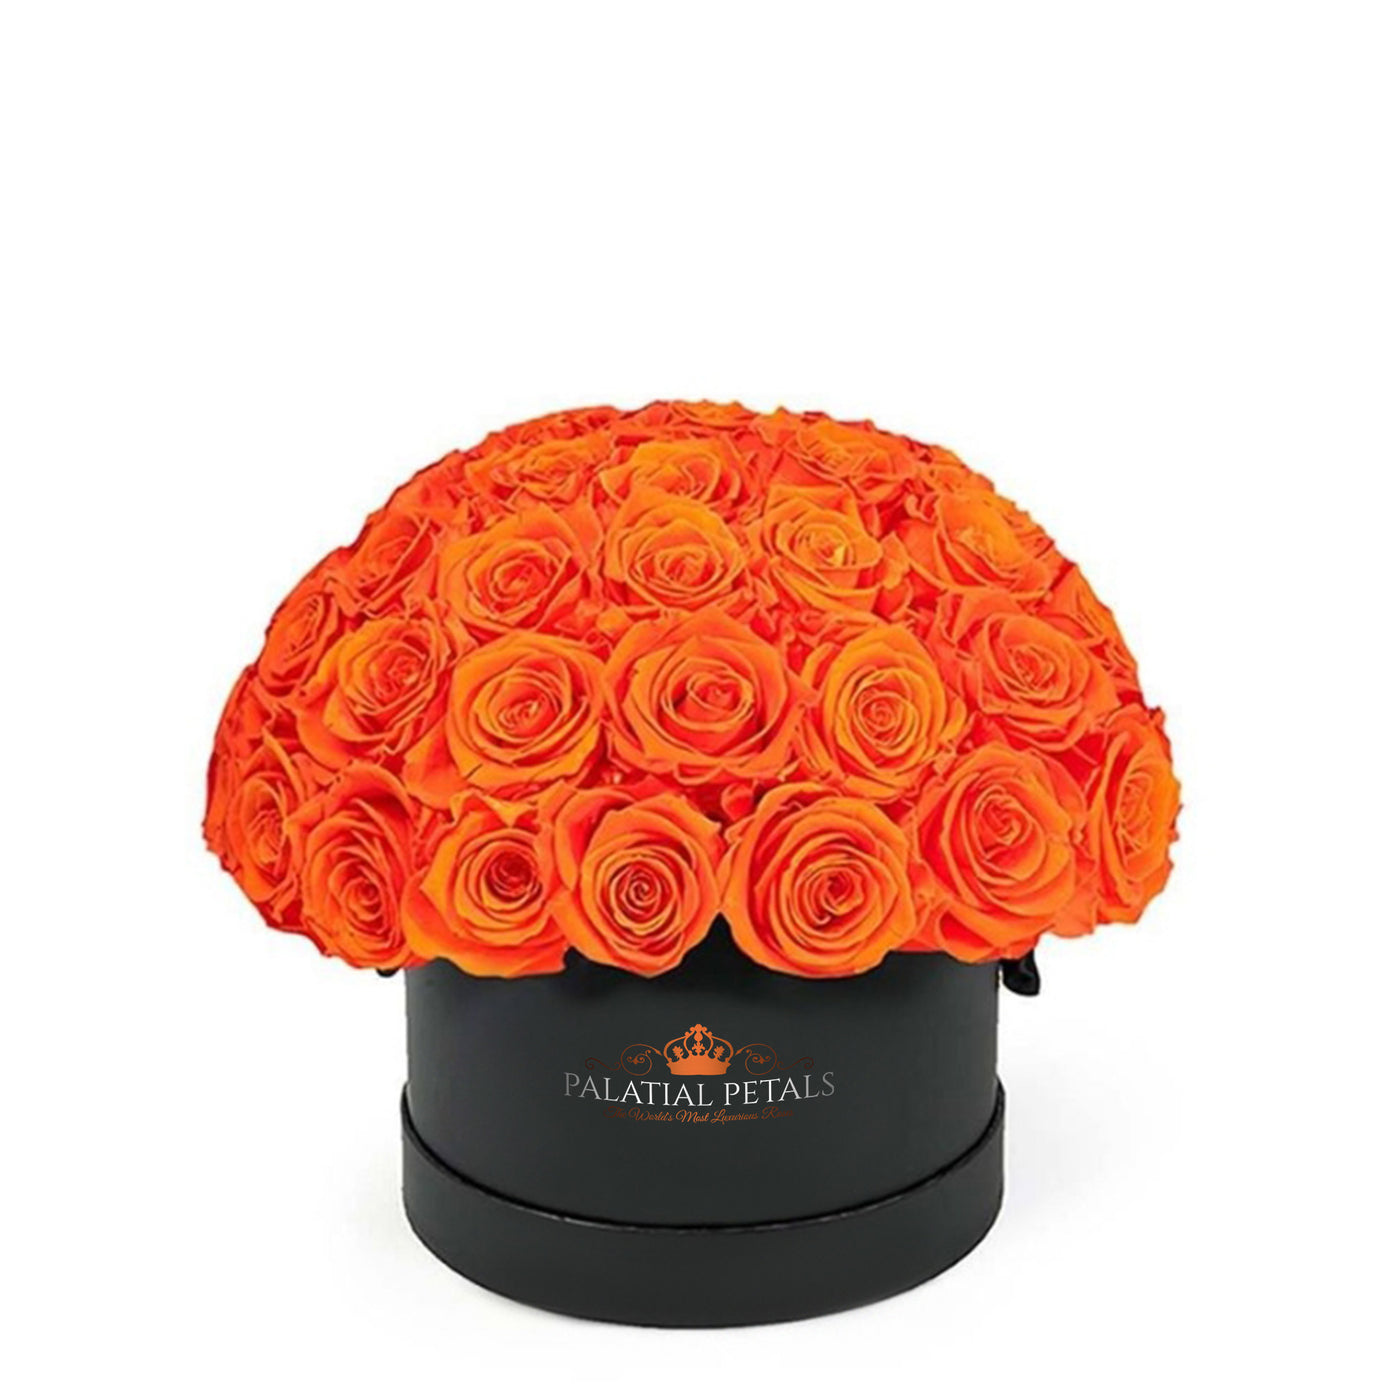 Hermès Orange Roses That Last A Year - Classic "Crown"